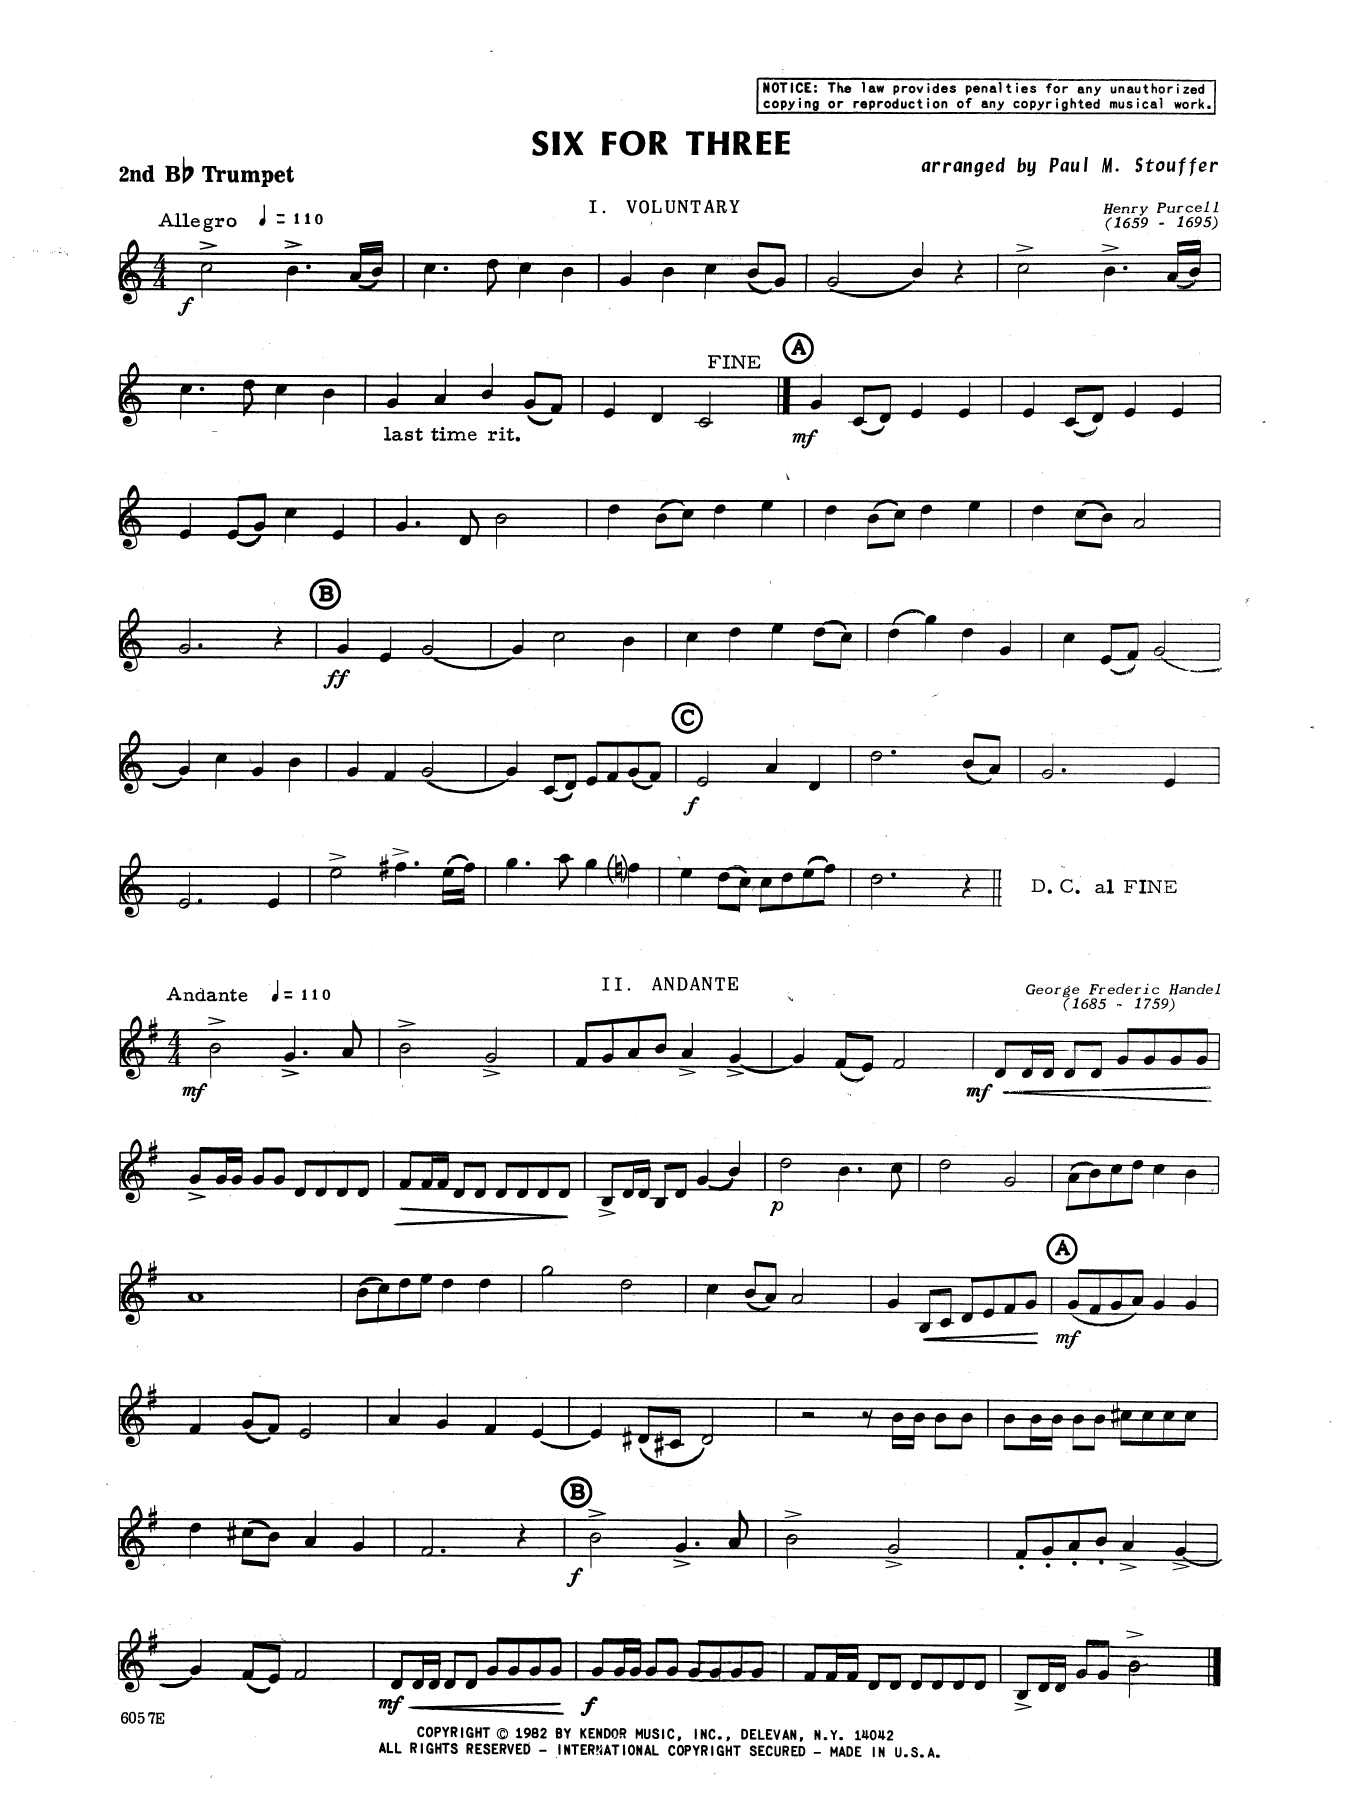 Download Paul Stouffer Six For Three - 2nd Bb Trumpet Sheet Music